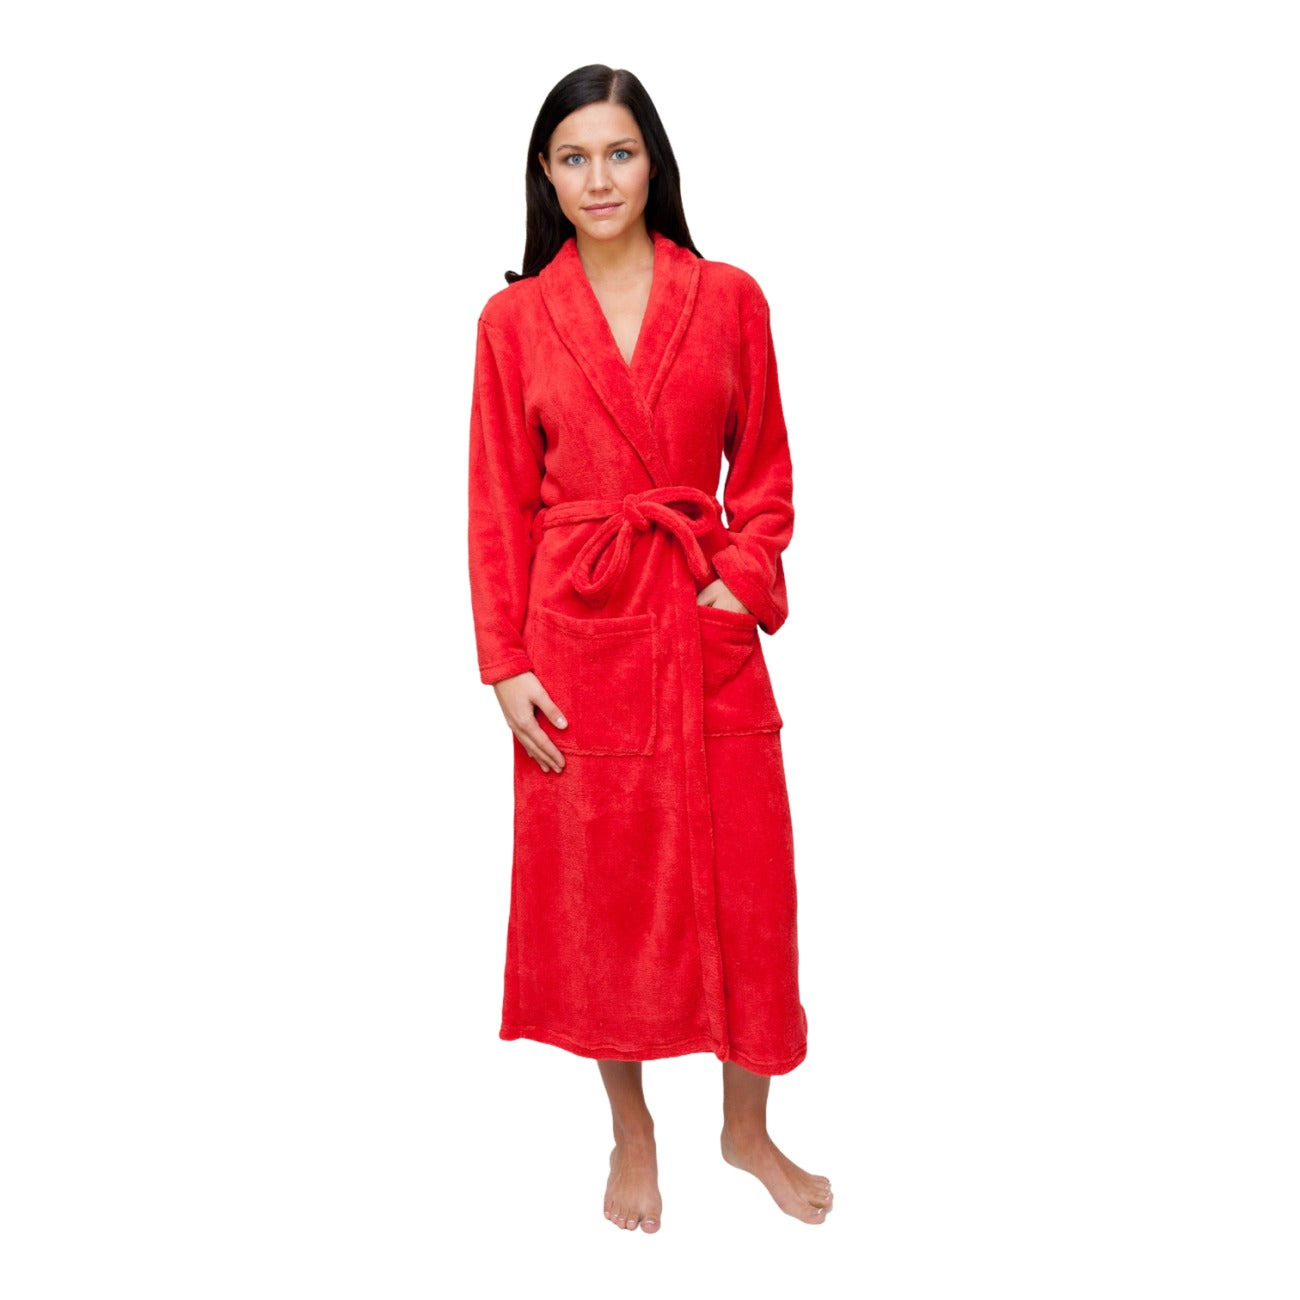 Custom Robes for Family - Grandmother